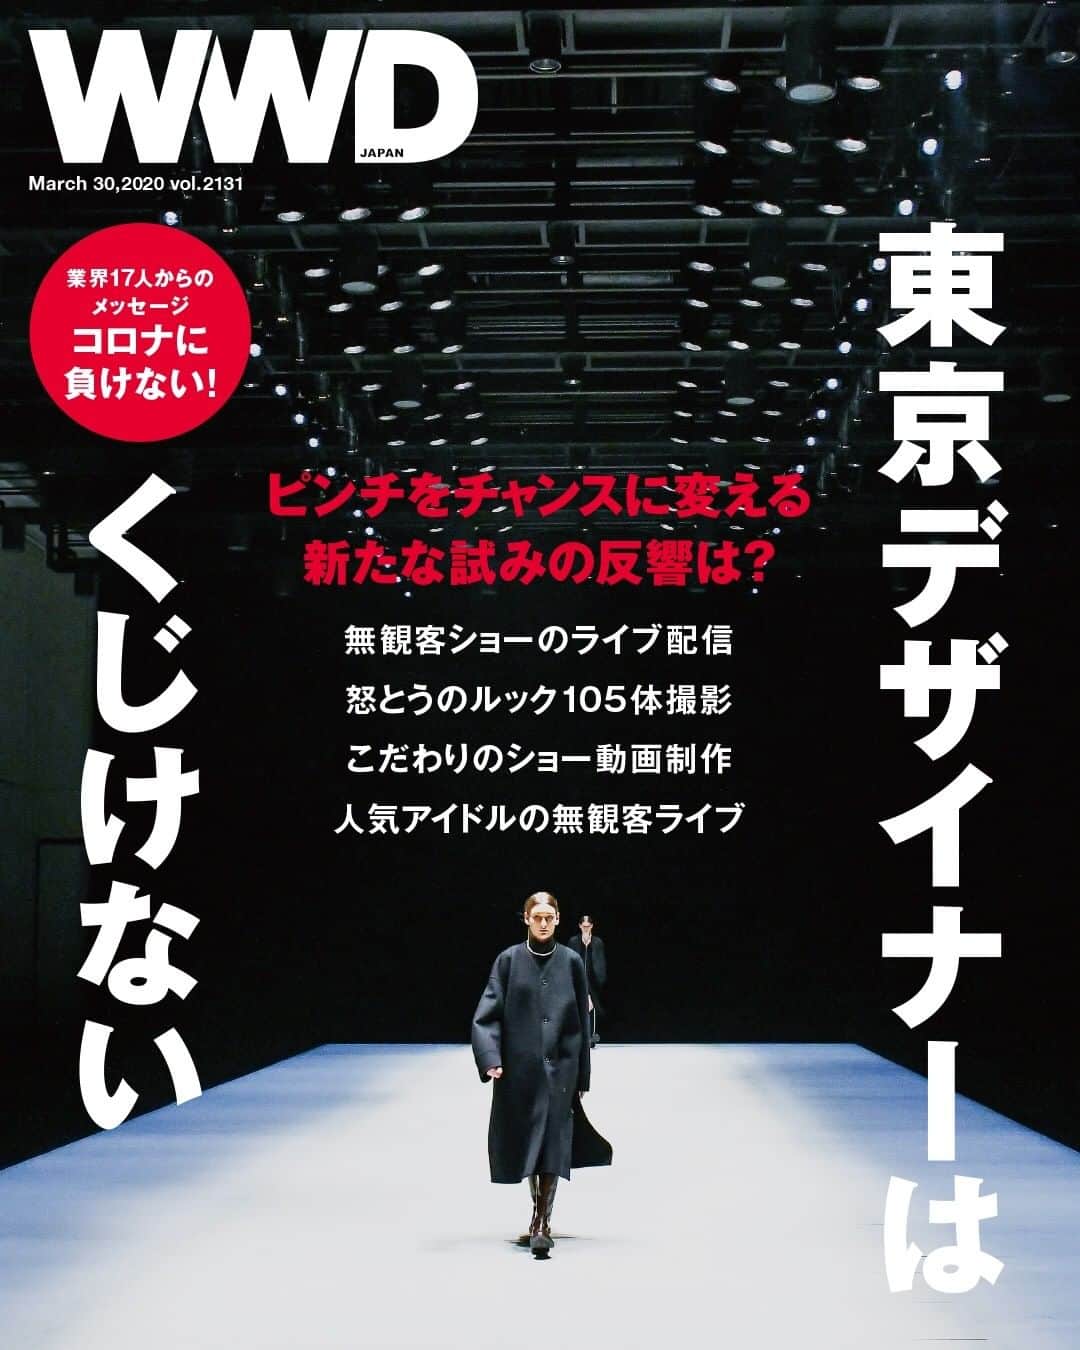 WWDジャパンのインスタグラム